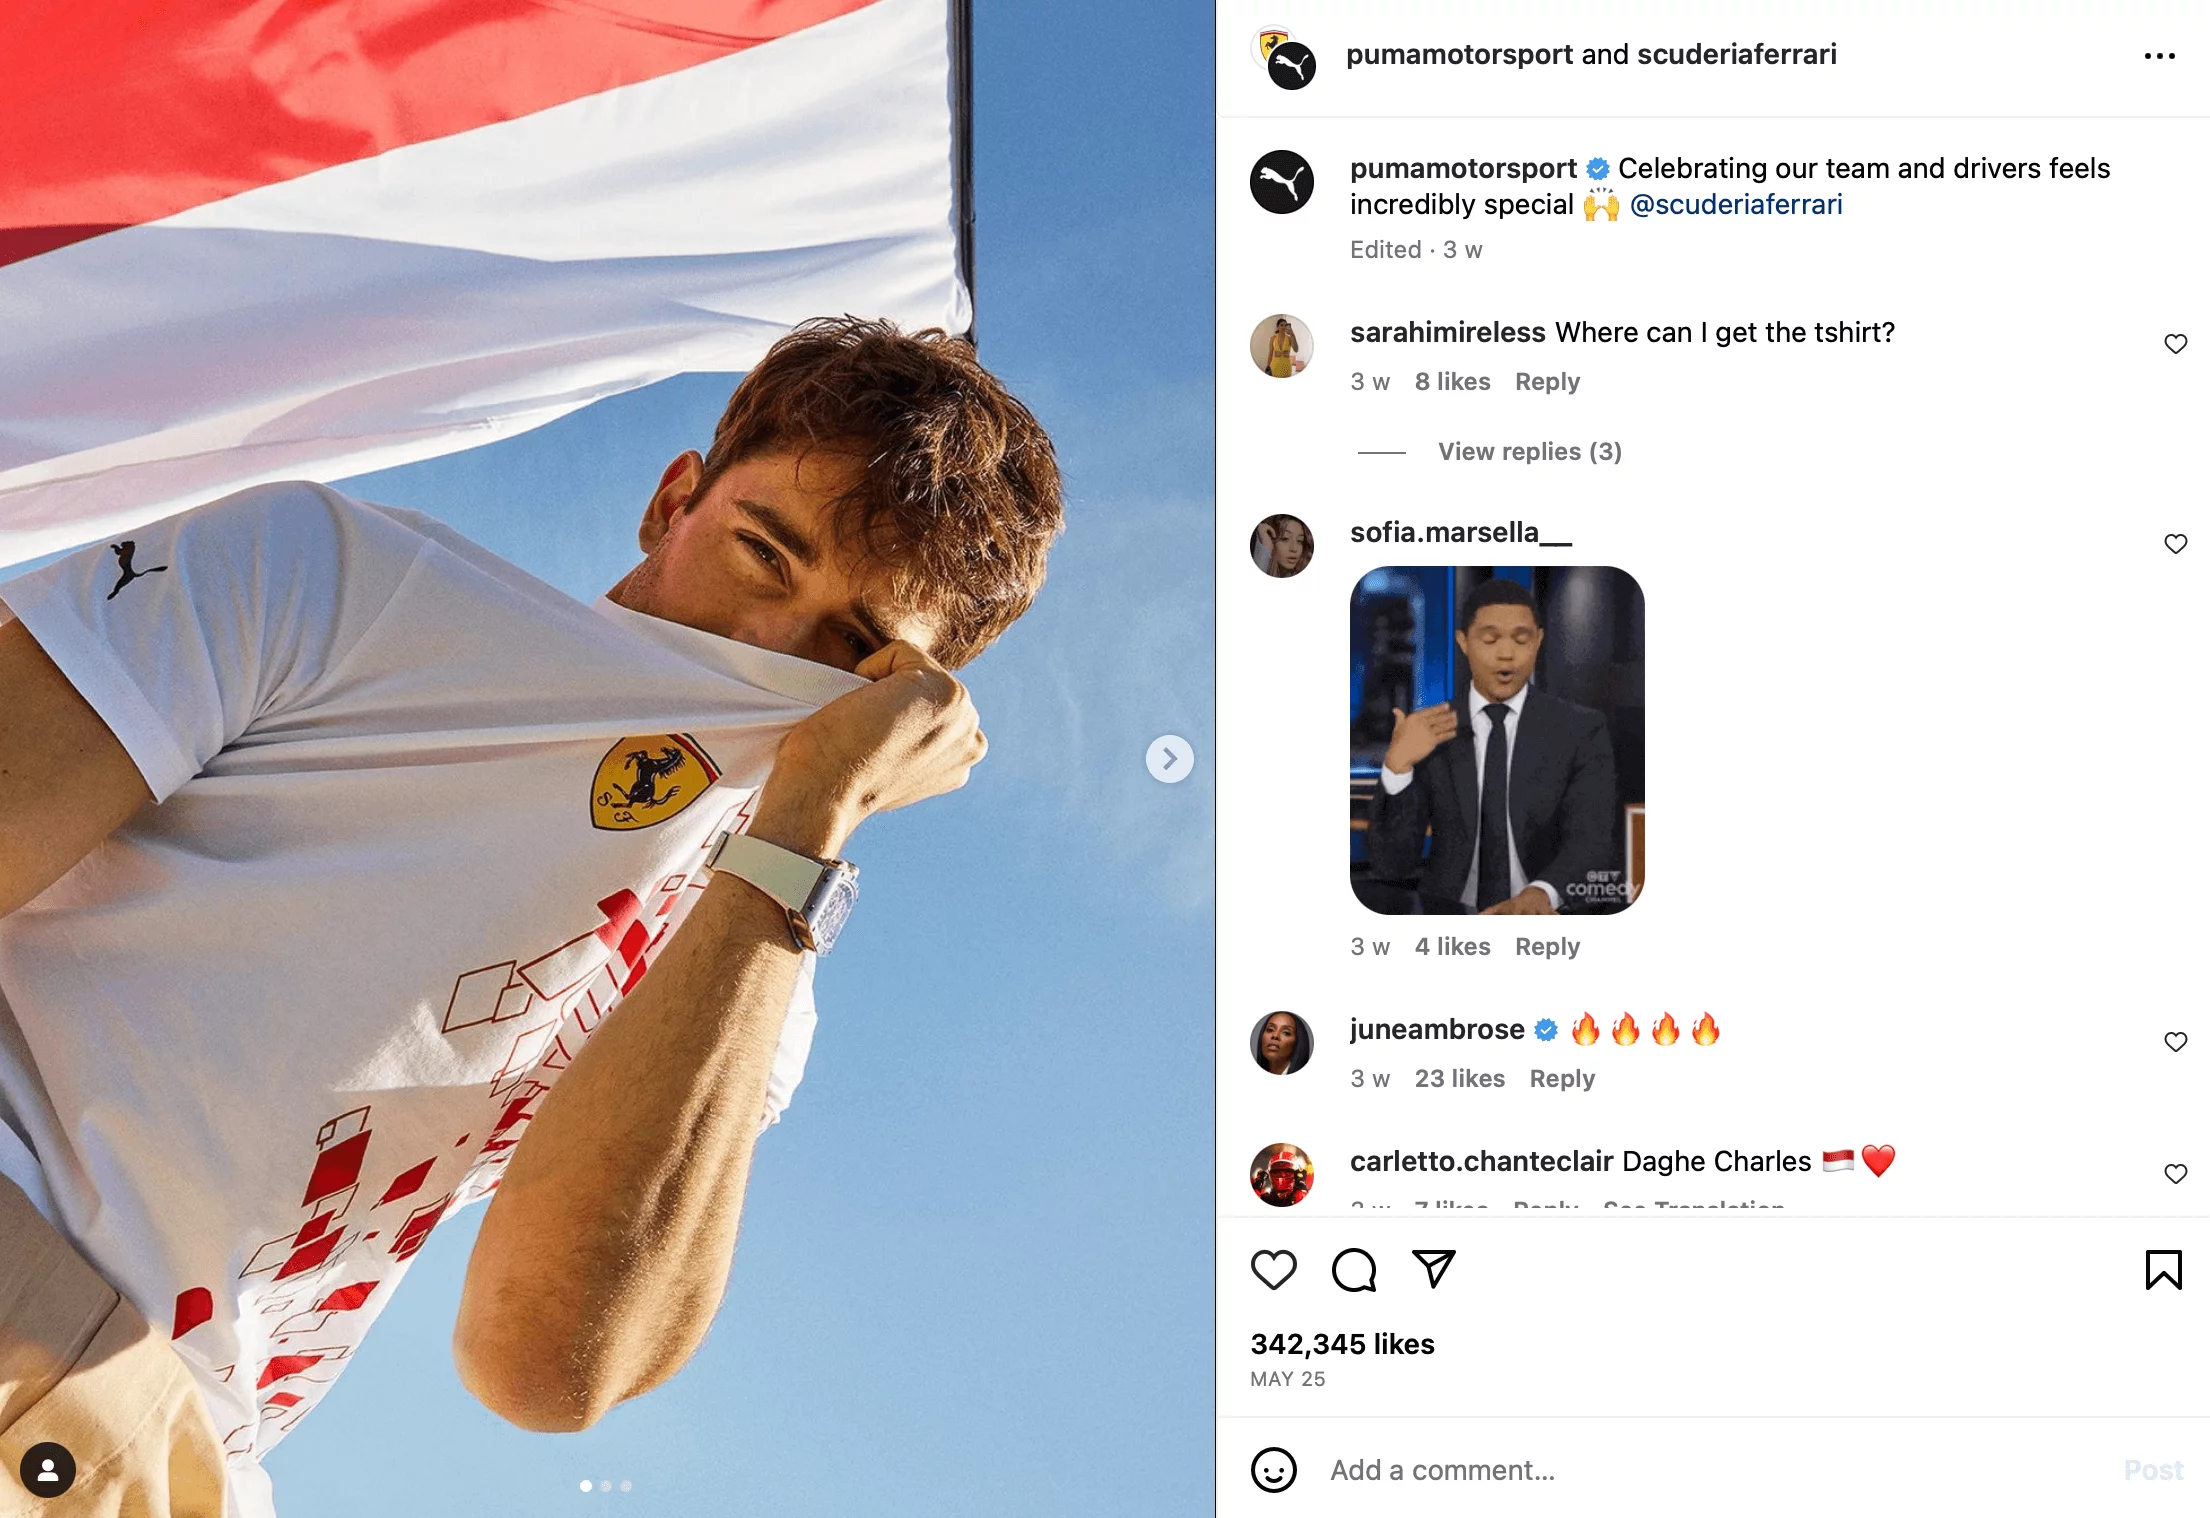 @pumamotorsport IG collaborative post with @scuderiaferrari using a photo with F1 Ferrari driver, Charles Leclerc wearing Puma x Ferrari t-shirt.